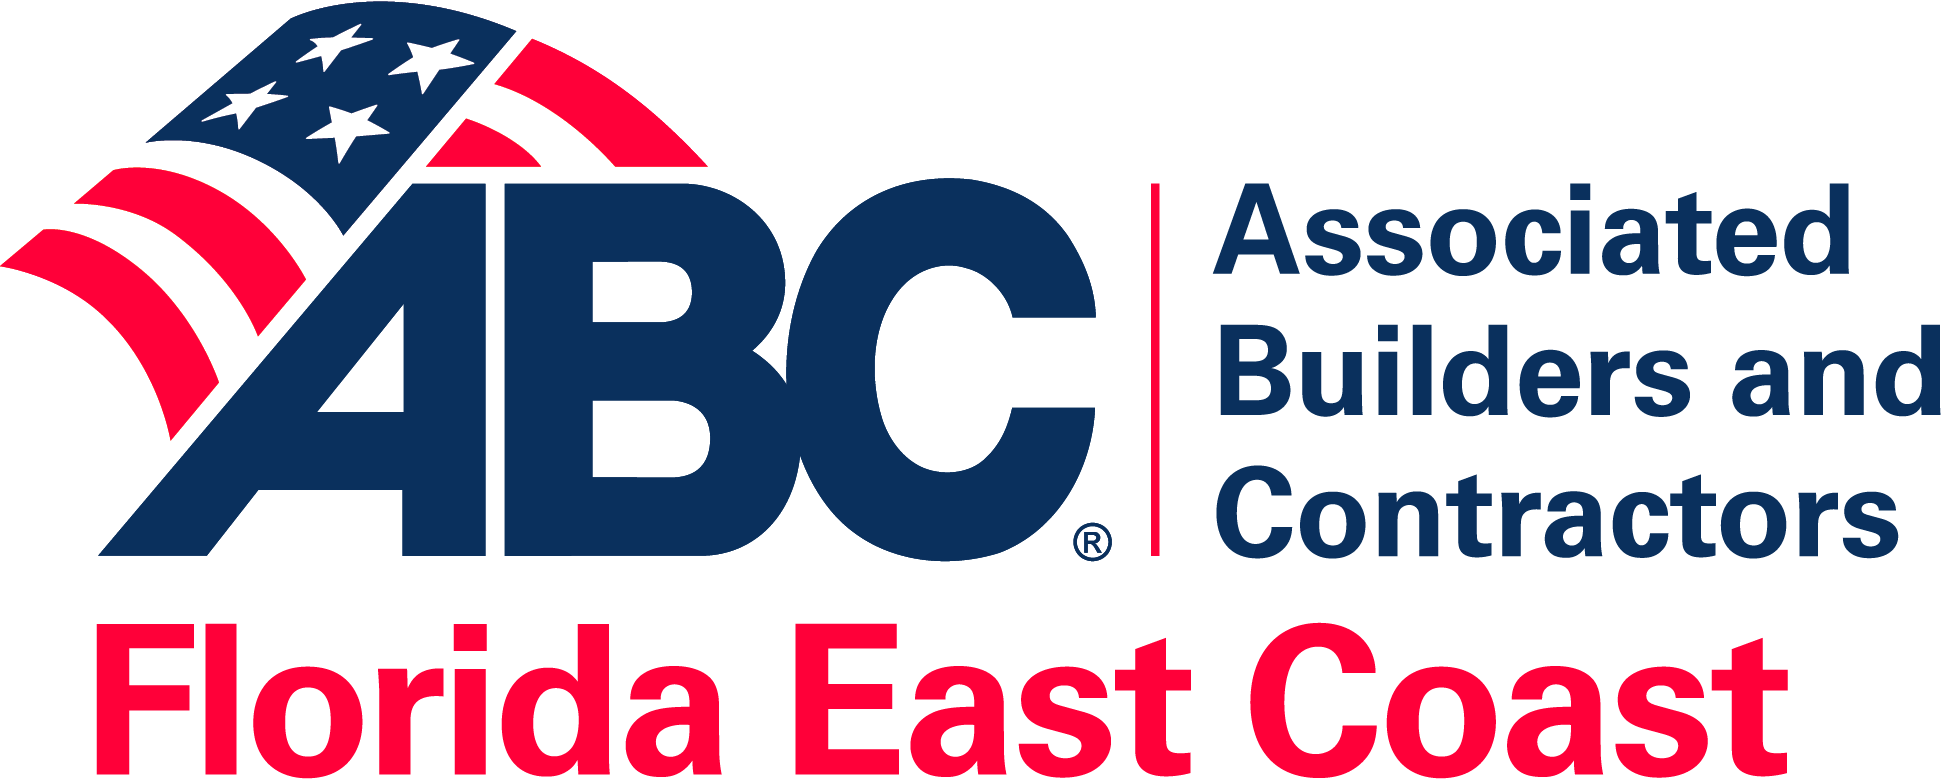 ABC Associated Builder and Contractors Florida East Coast logo